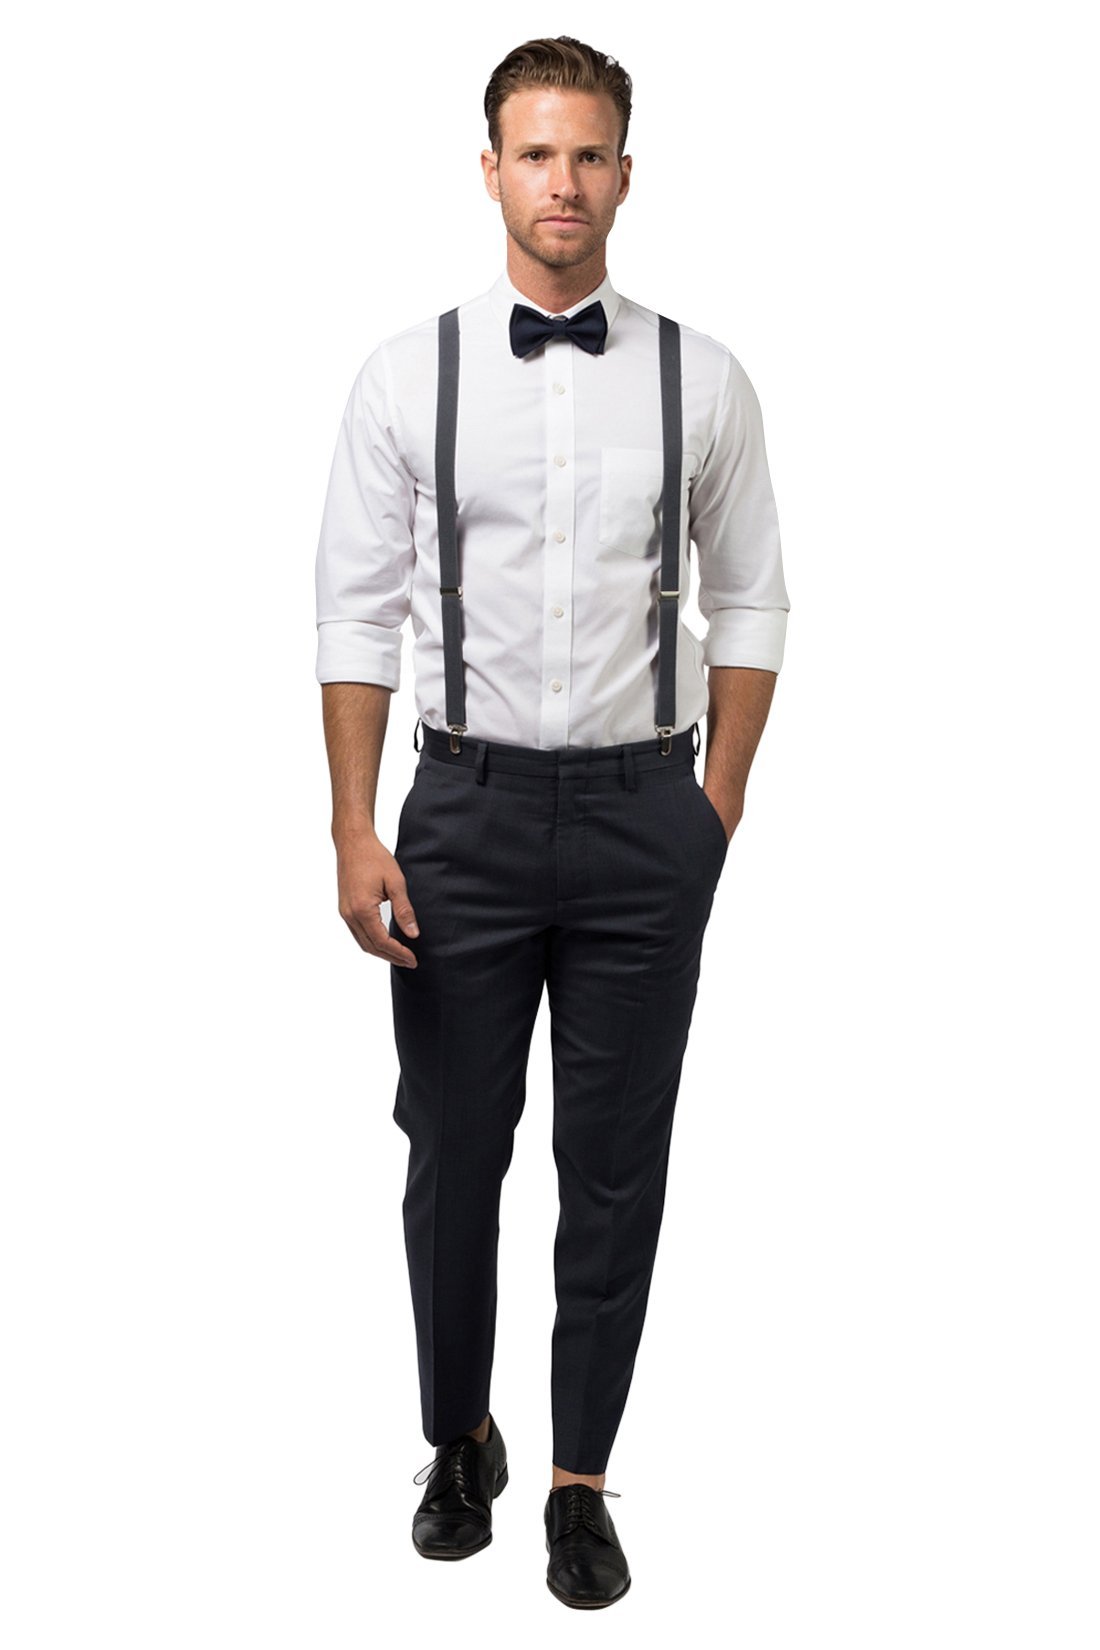 Charcoal Grey Suspenders & Navy Bow Tie - Baby to Adult Sizes– Armoniia